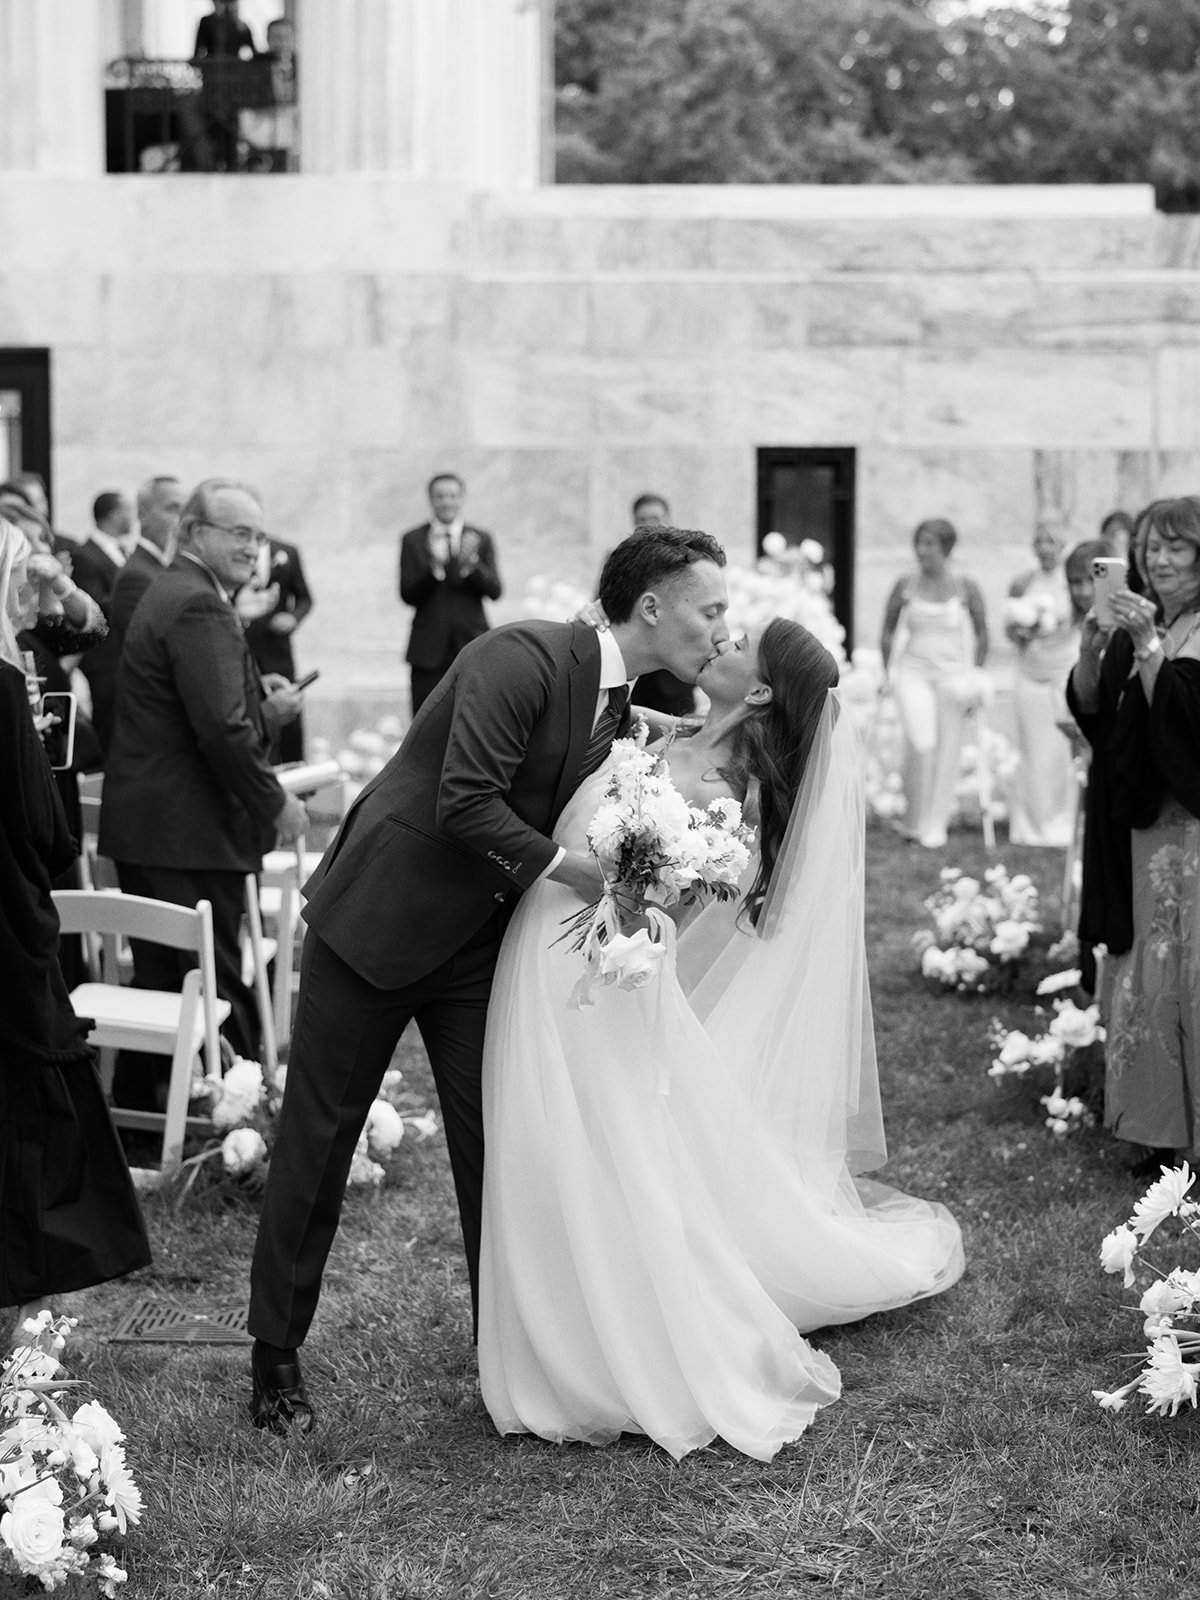 Best-Austin-Wedding-Photographers-Elopement-Film-35mm-Asheville-Santa-Barbara-1034.jpg